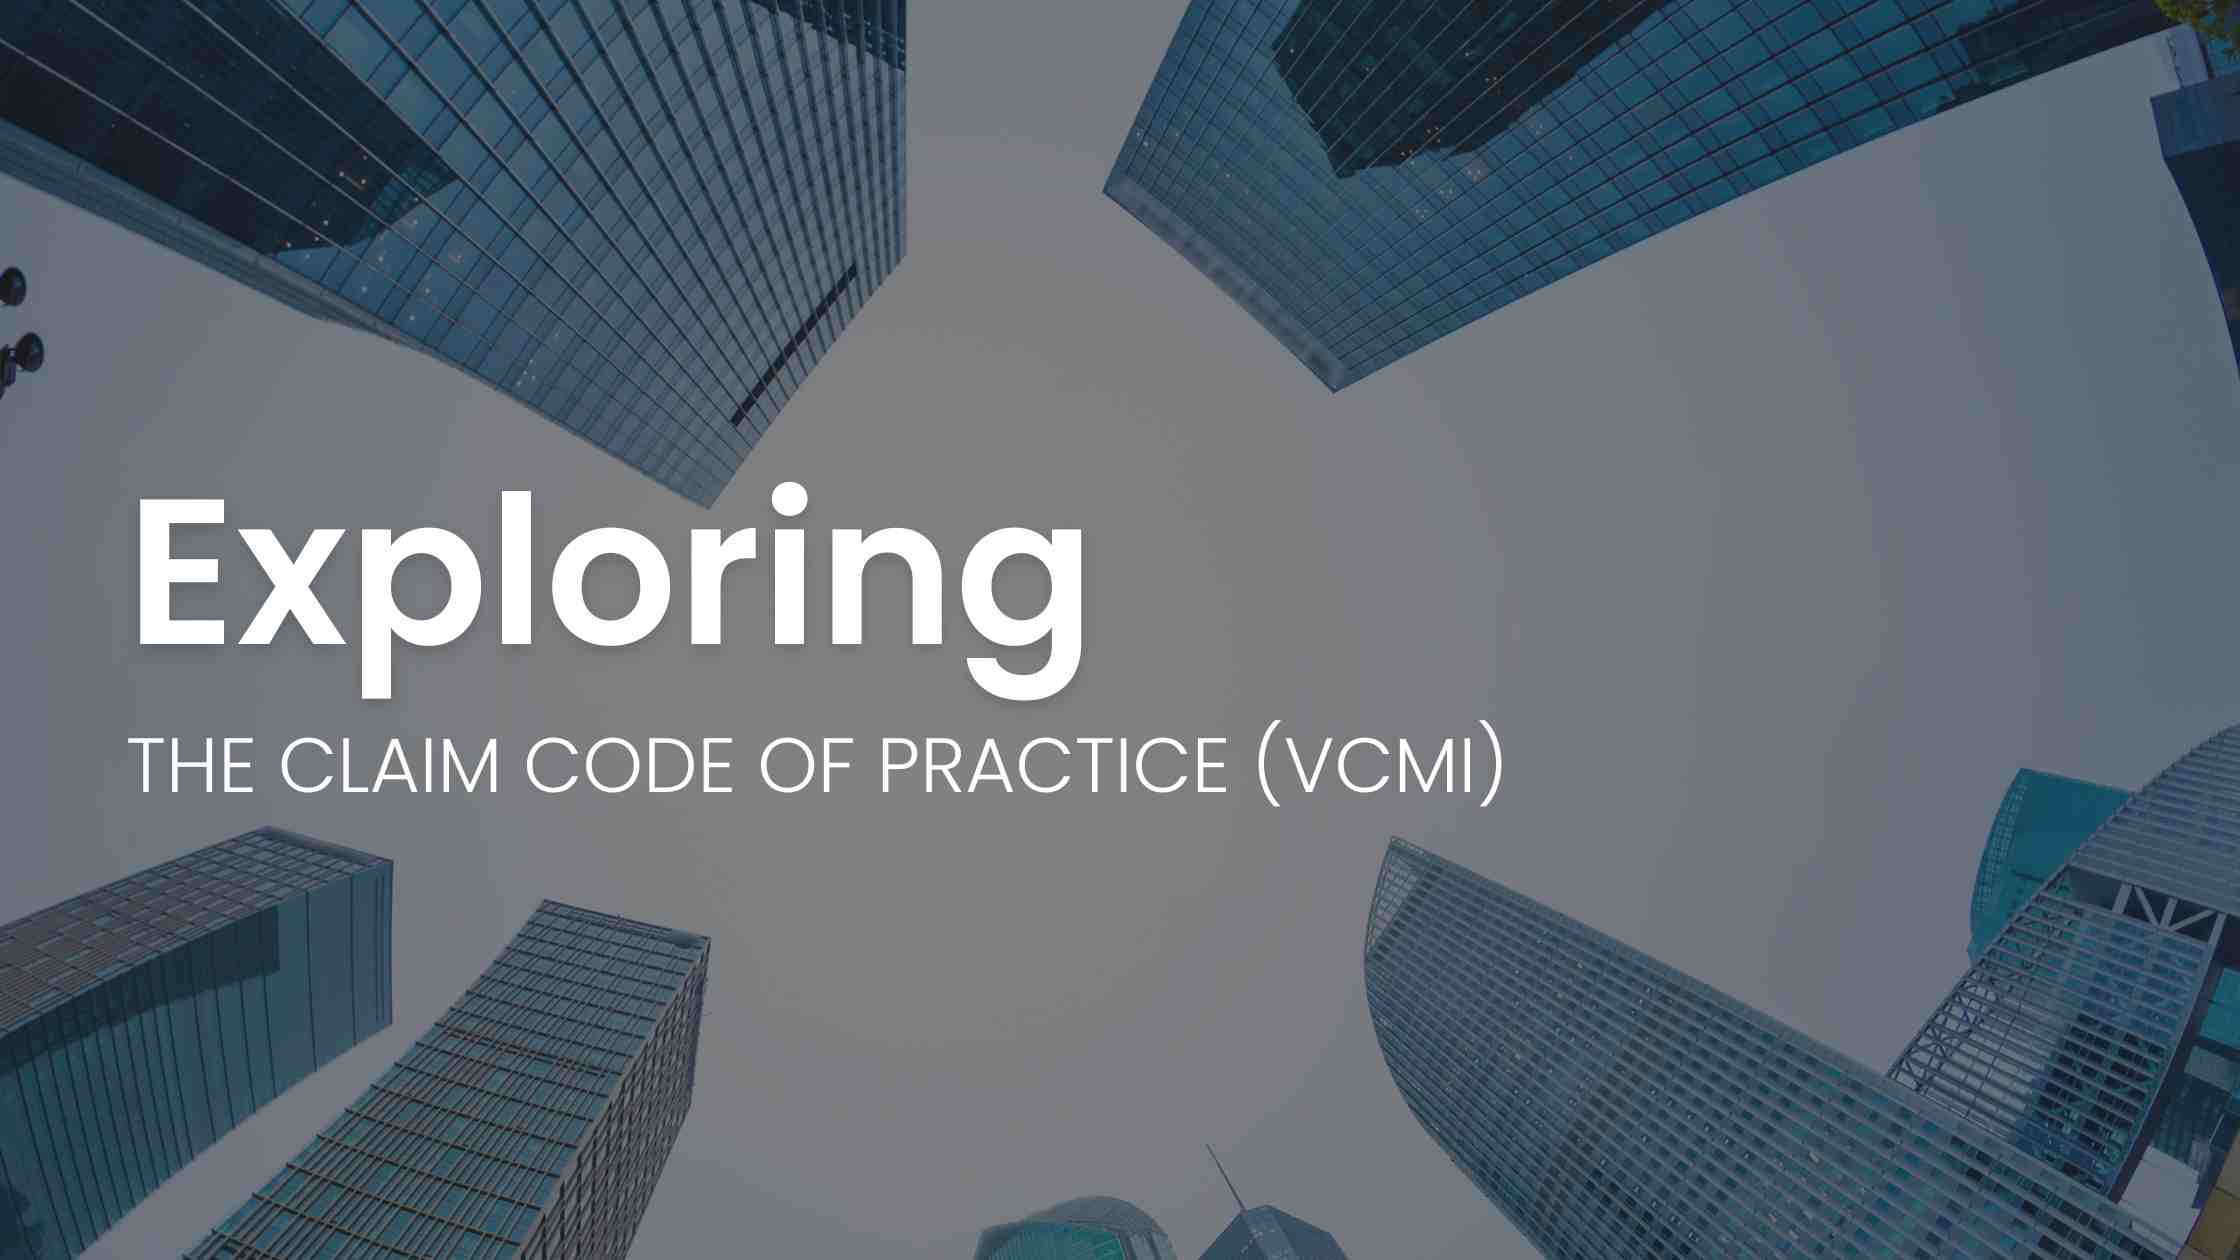 Claim Code of Practice (VCMI)